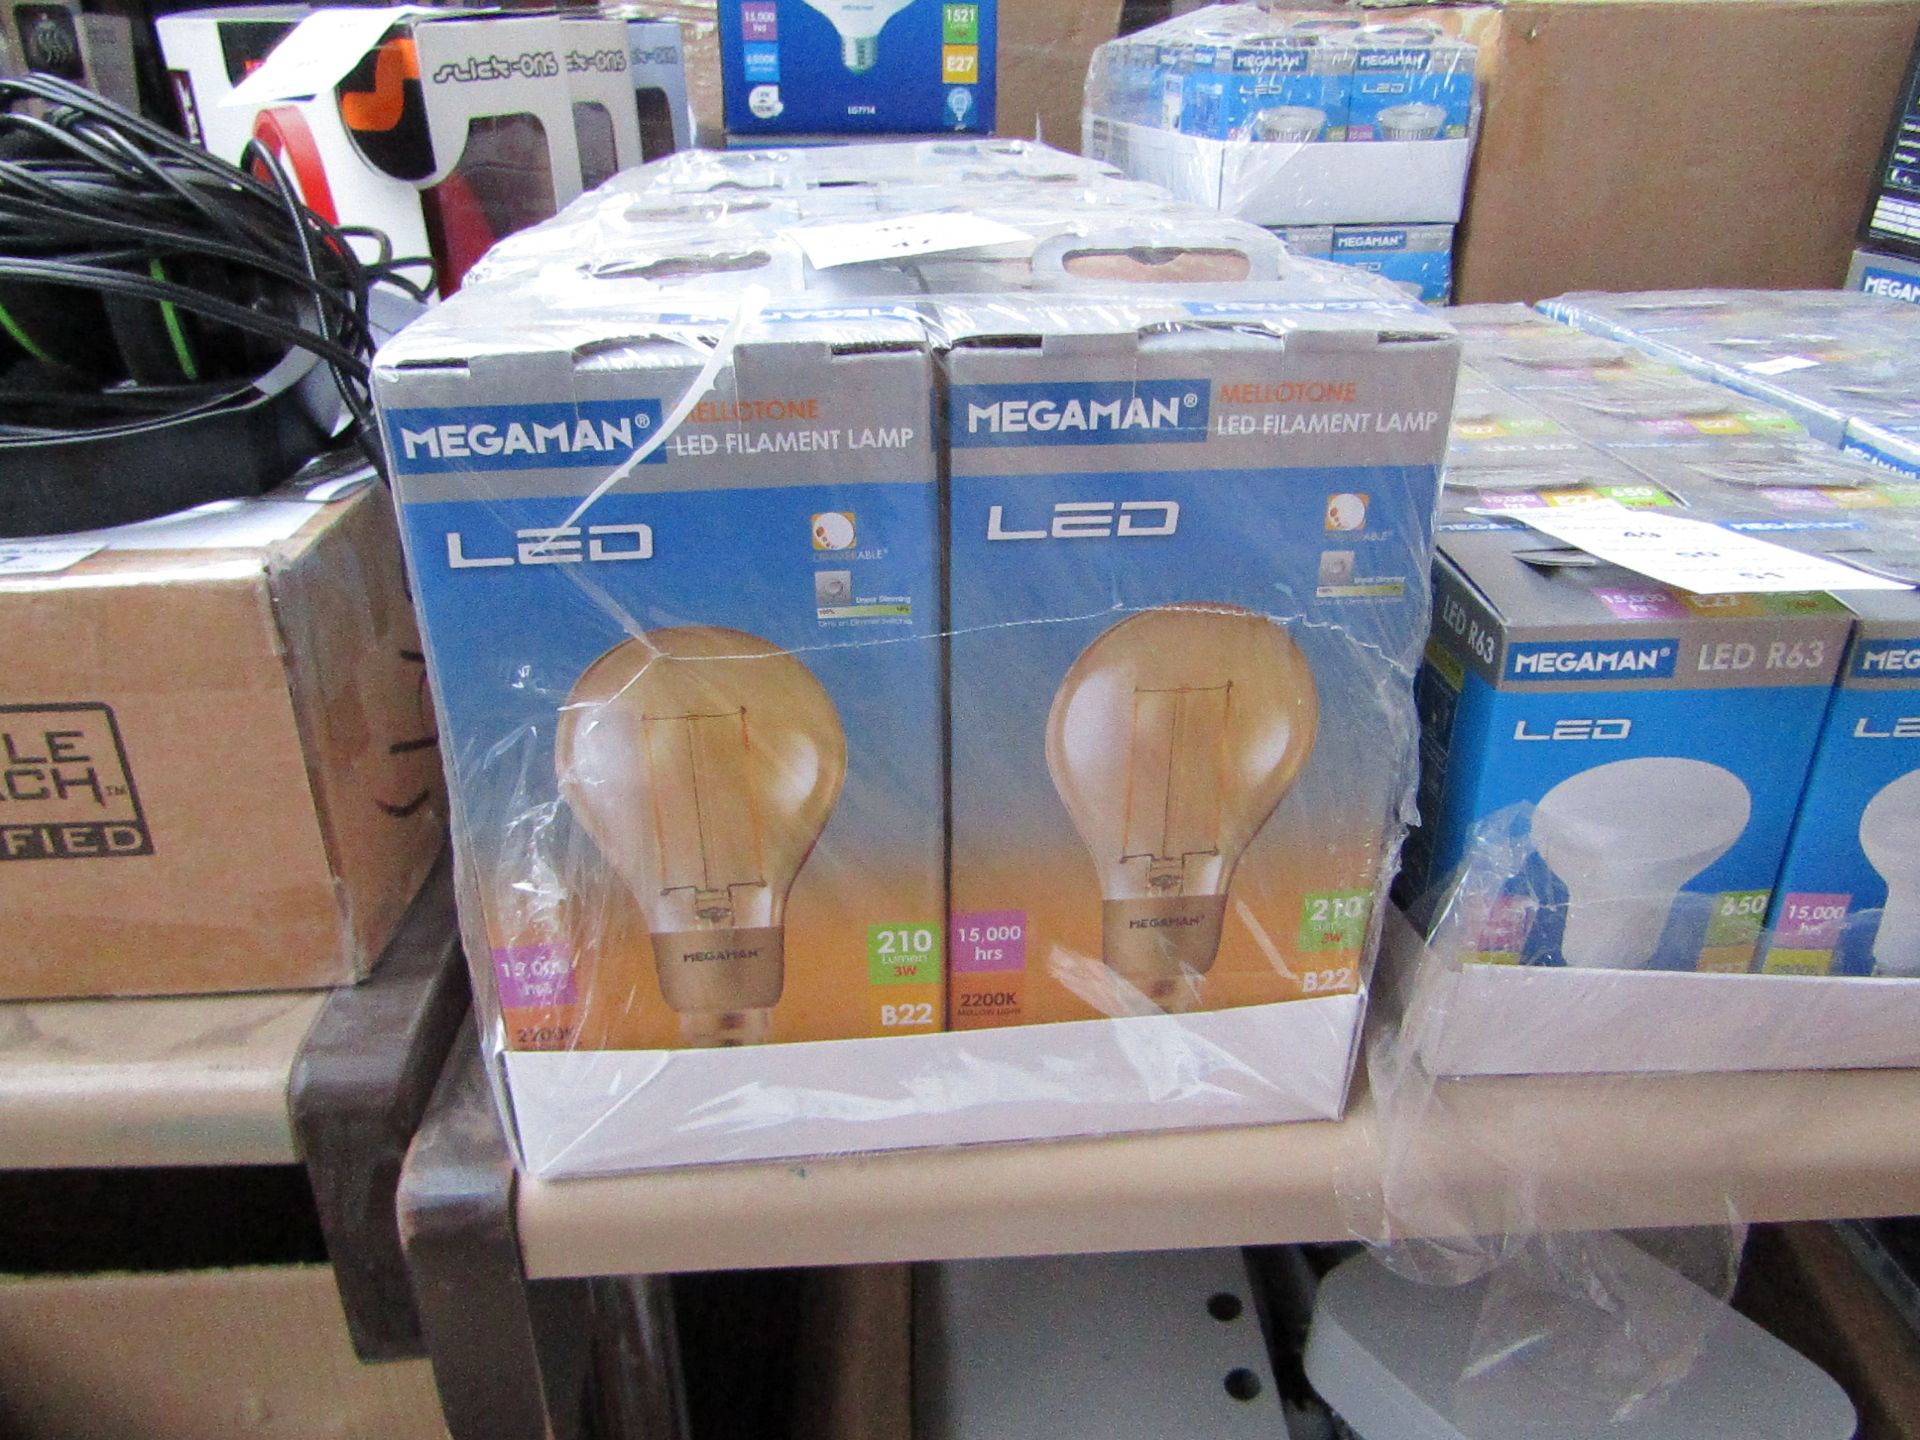 1x Megaman LED Filament bulb, new and boxed. 15,000Hrs / B22 / 210 Lumens